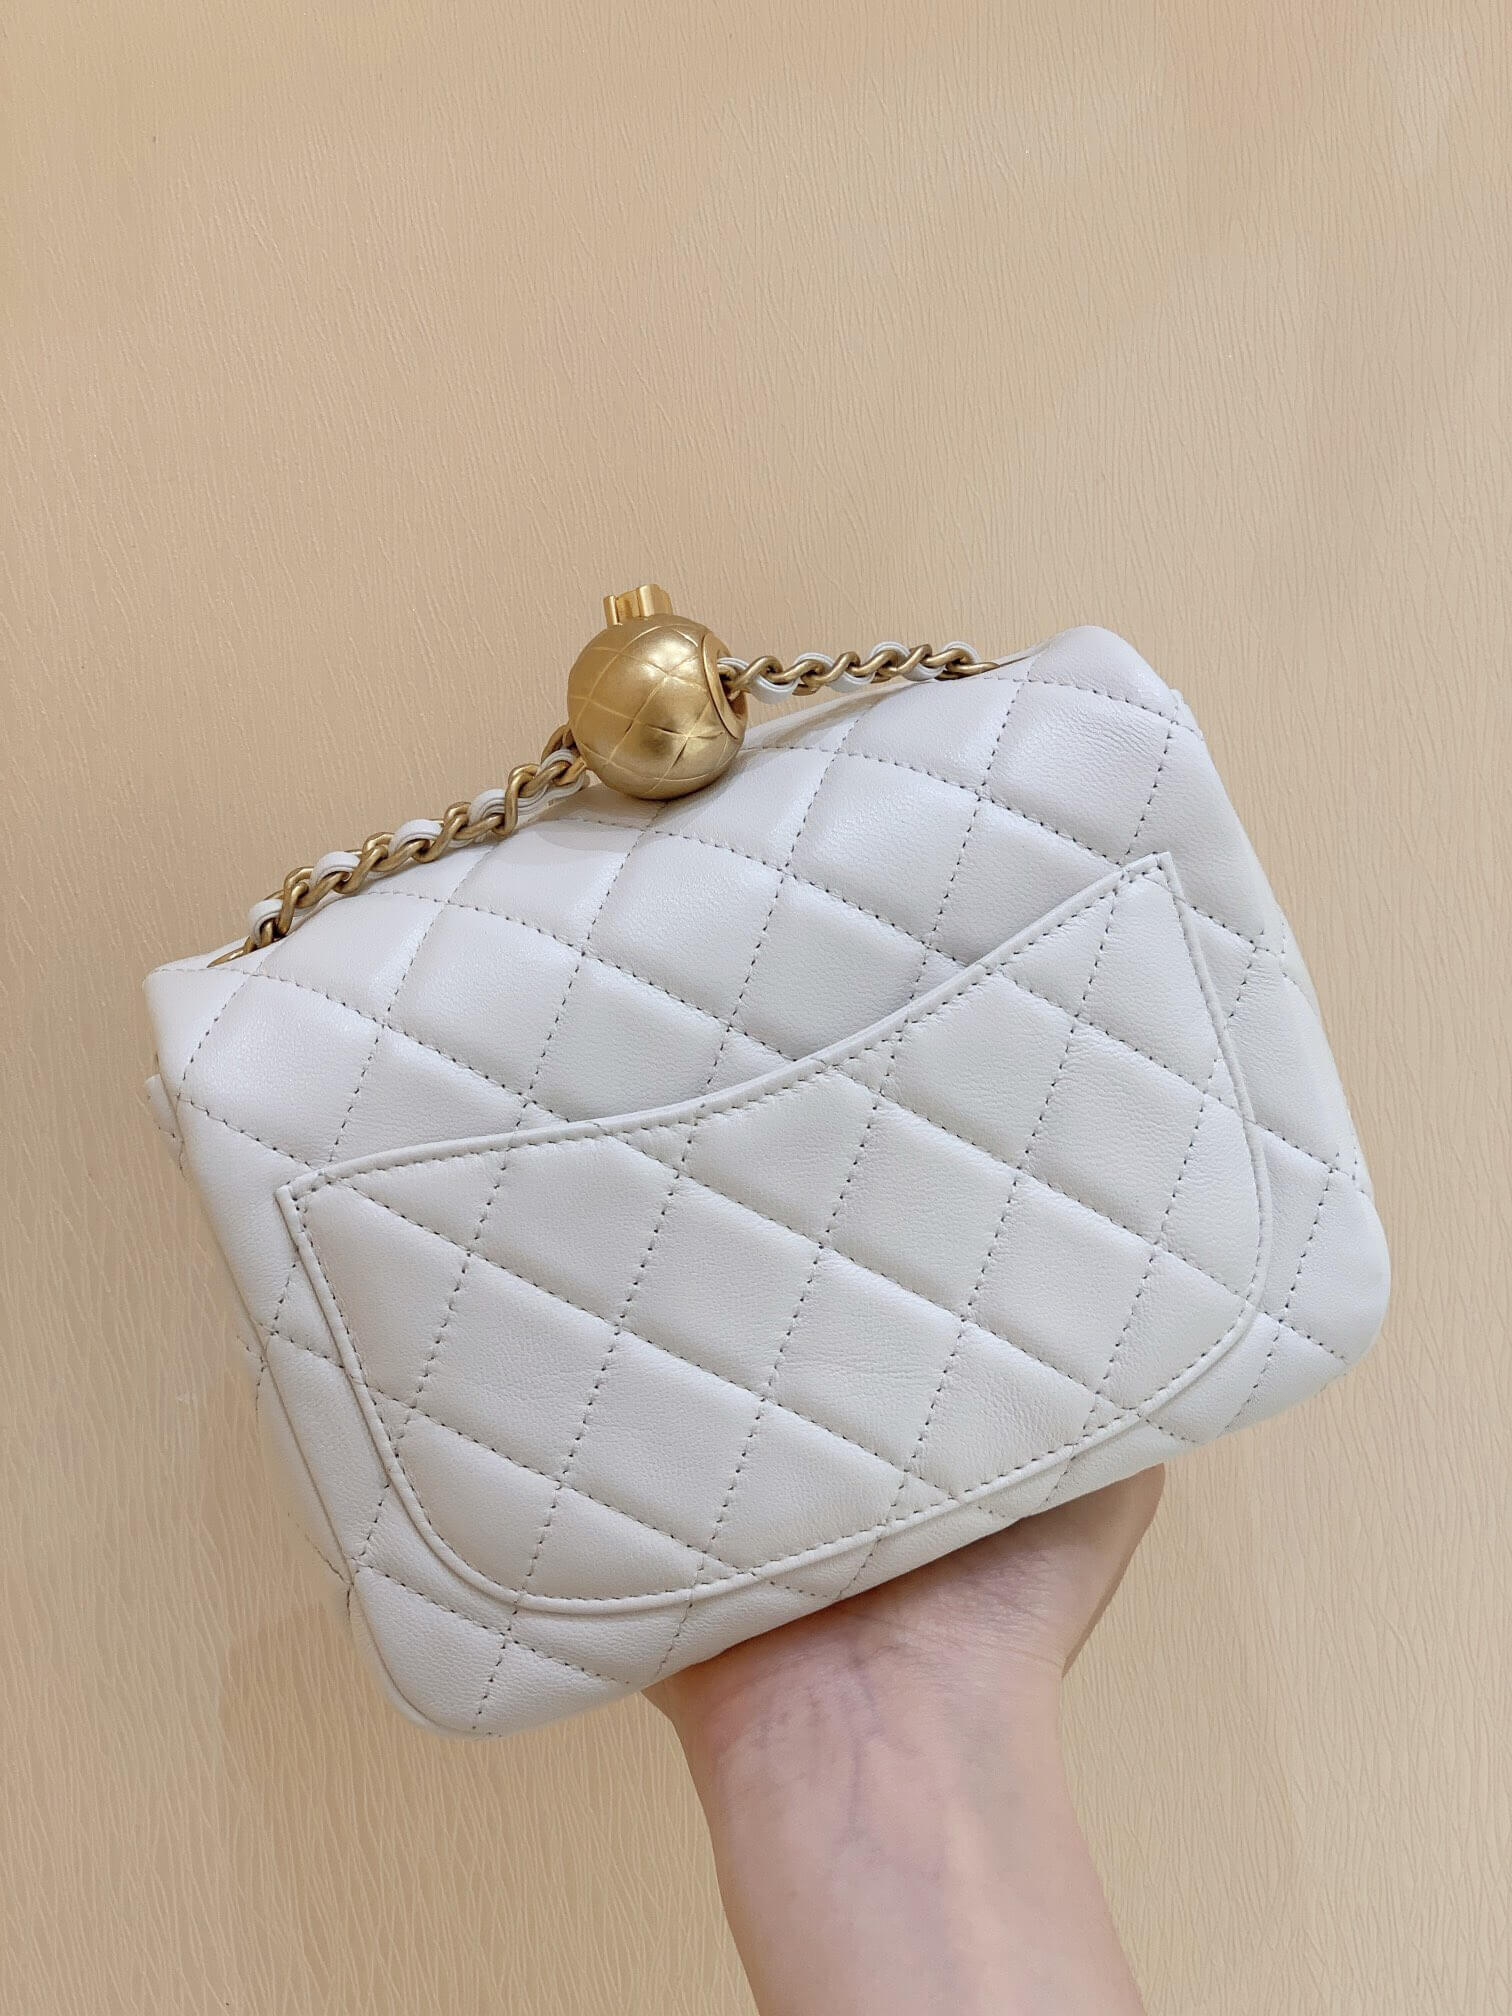 Chanel Flap Bag 新款金属球包金珠CF方胖子 AS1786白色